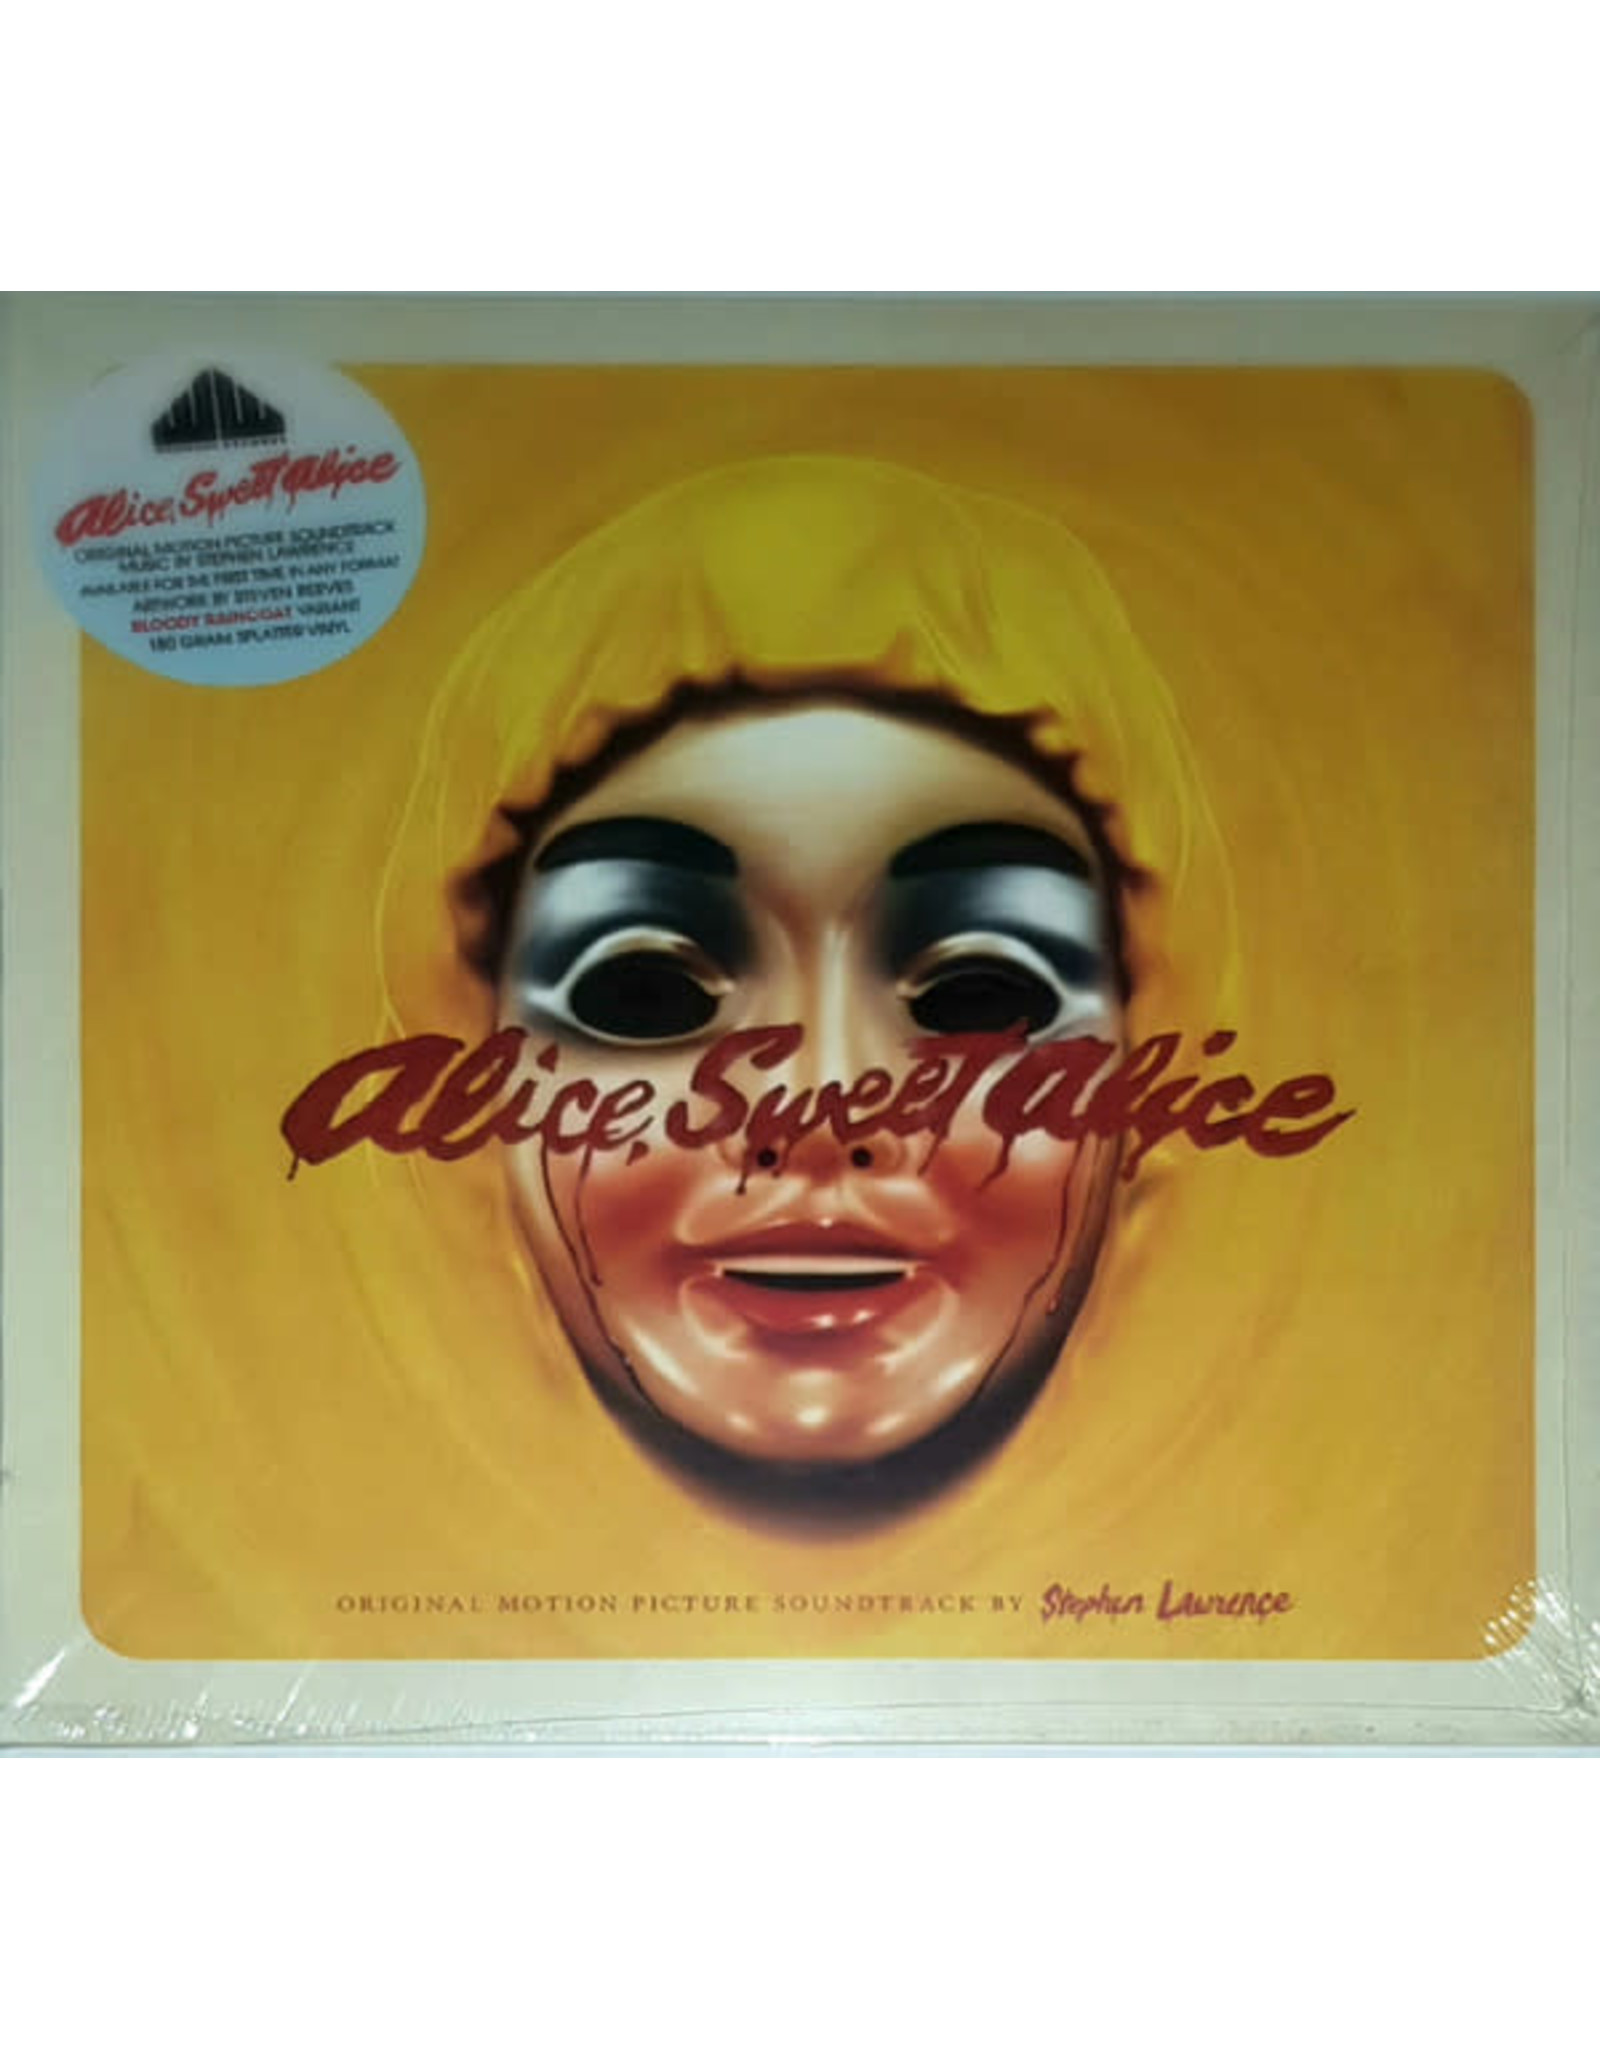 New Vinyl Stephen Lawrence - Alice, Sweet Alice OST (Bloody Raincoat) LP